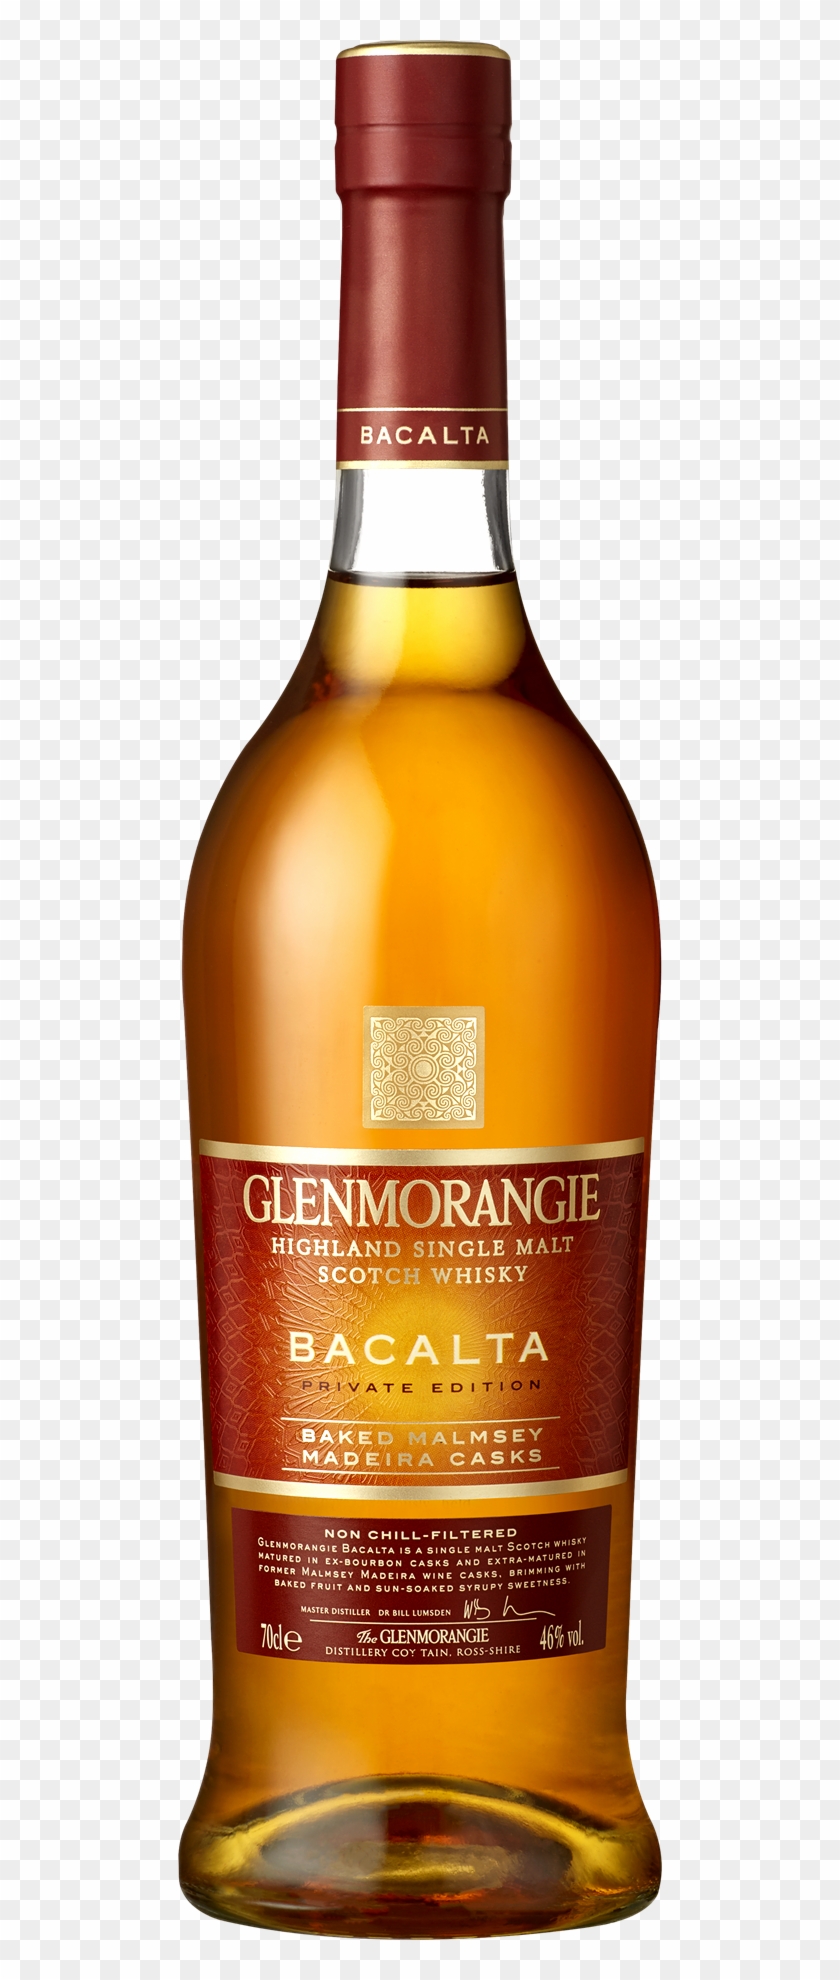 Glenmorangie Bacalta Bottle Shot Transparent Background - Glenmorangie Bottle Transparent Background Clipart